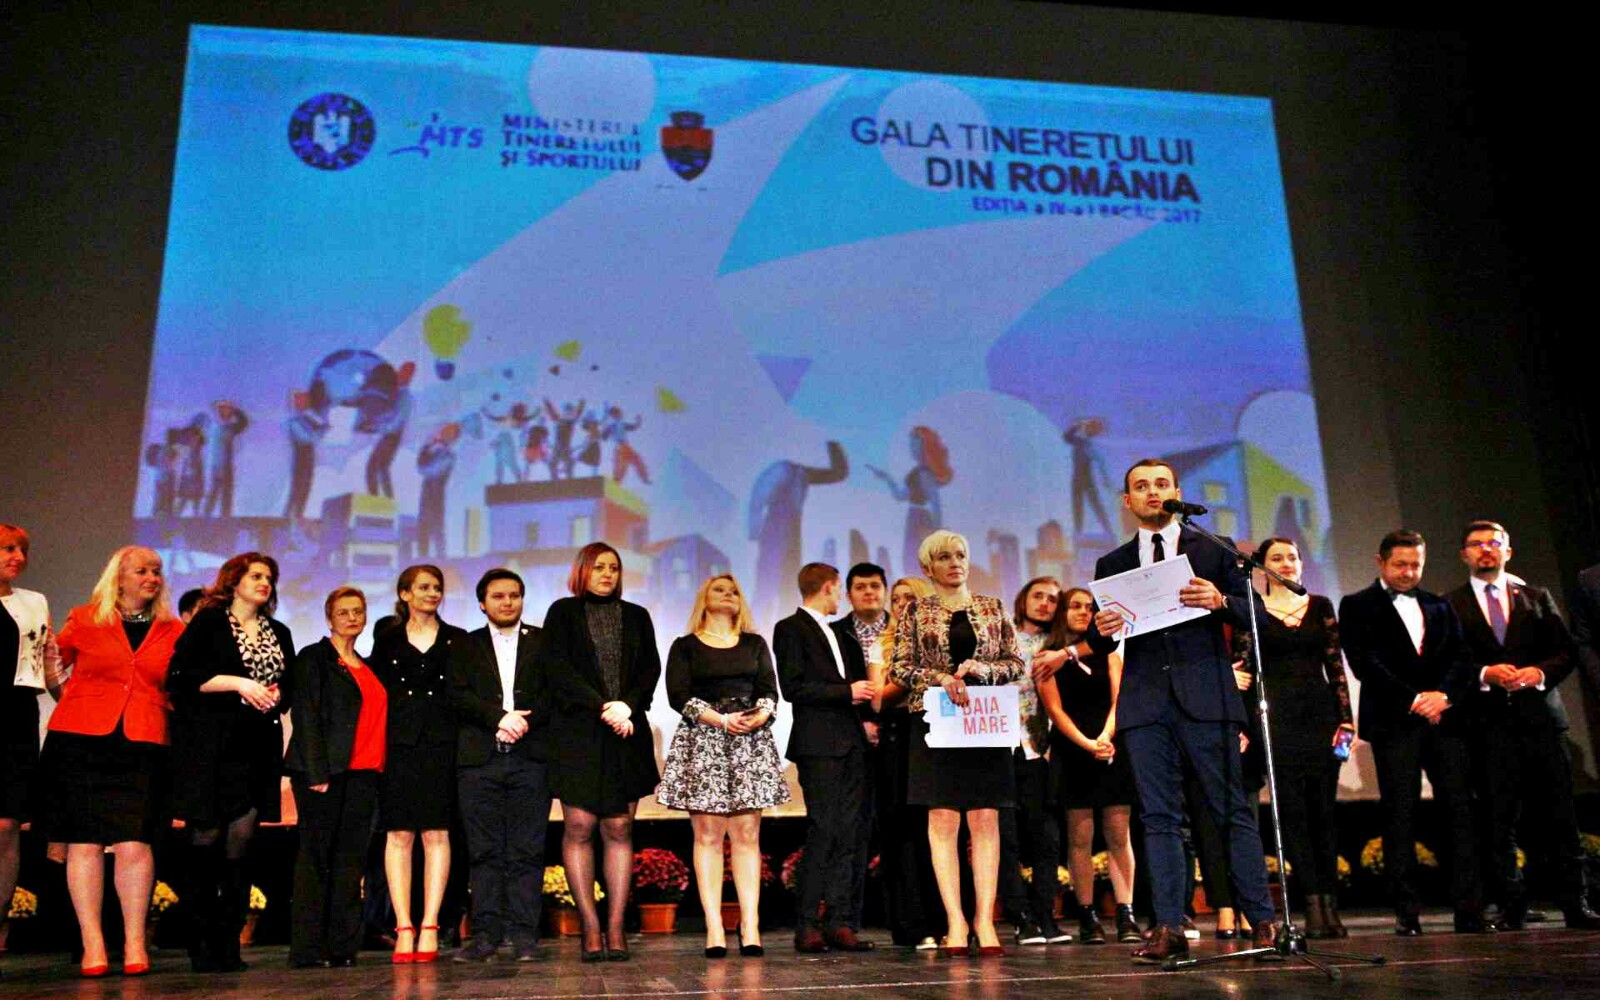 Baia Mare Capitala Tineretului Din Romania 2018 2019 1600x1000